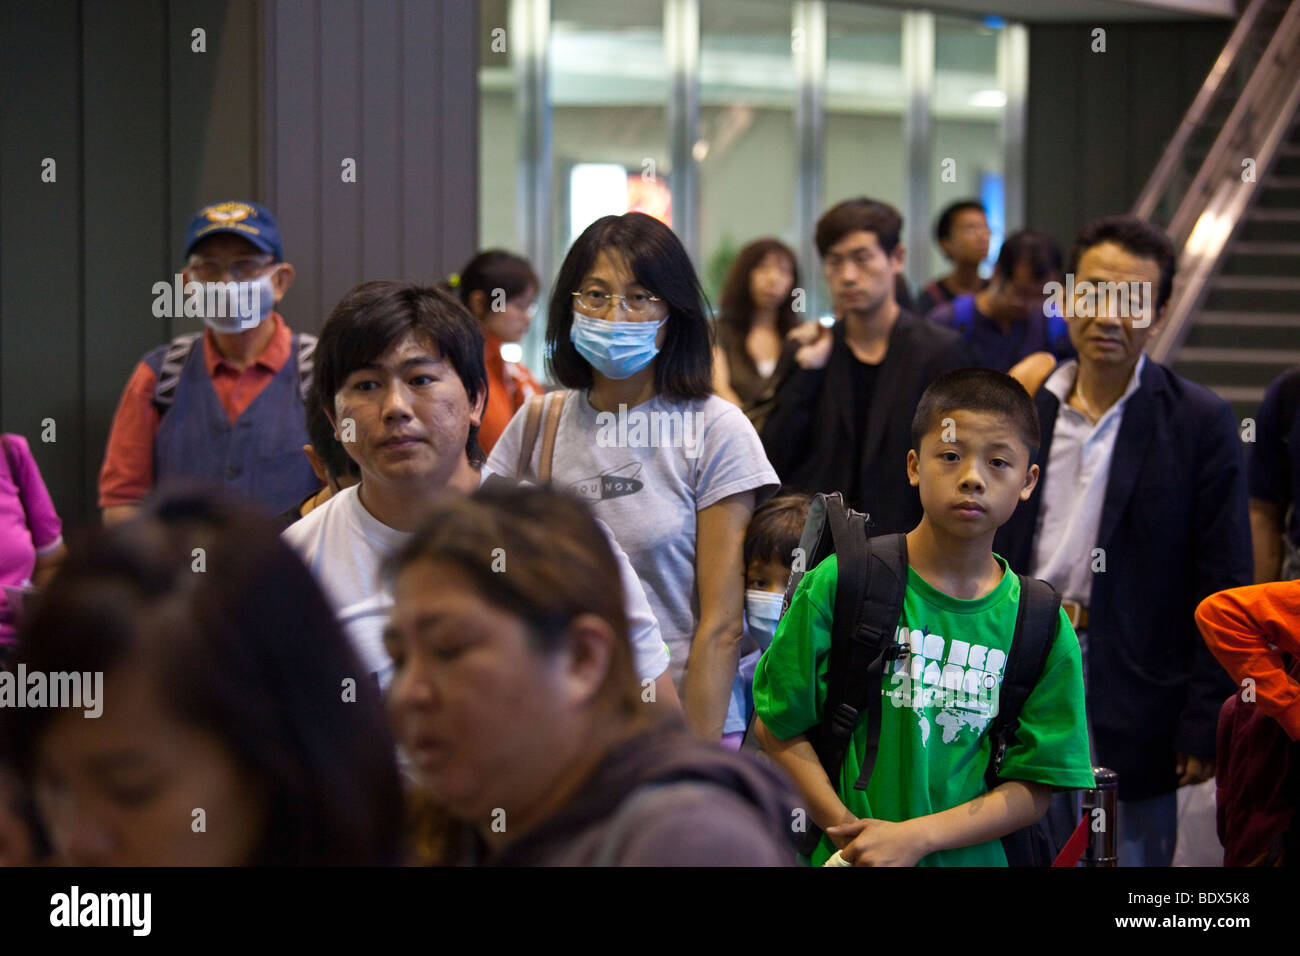 Worried about swine flu in NRT Narita Airport in Japan Stock Photo